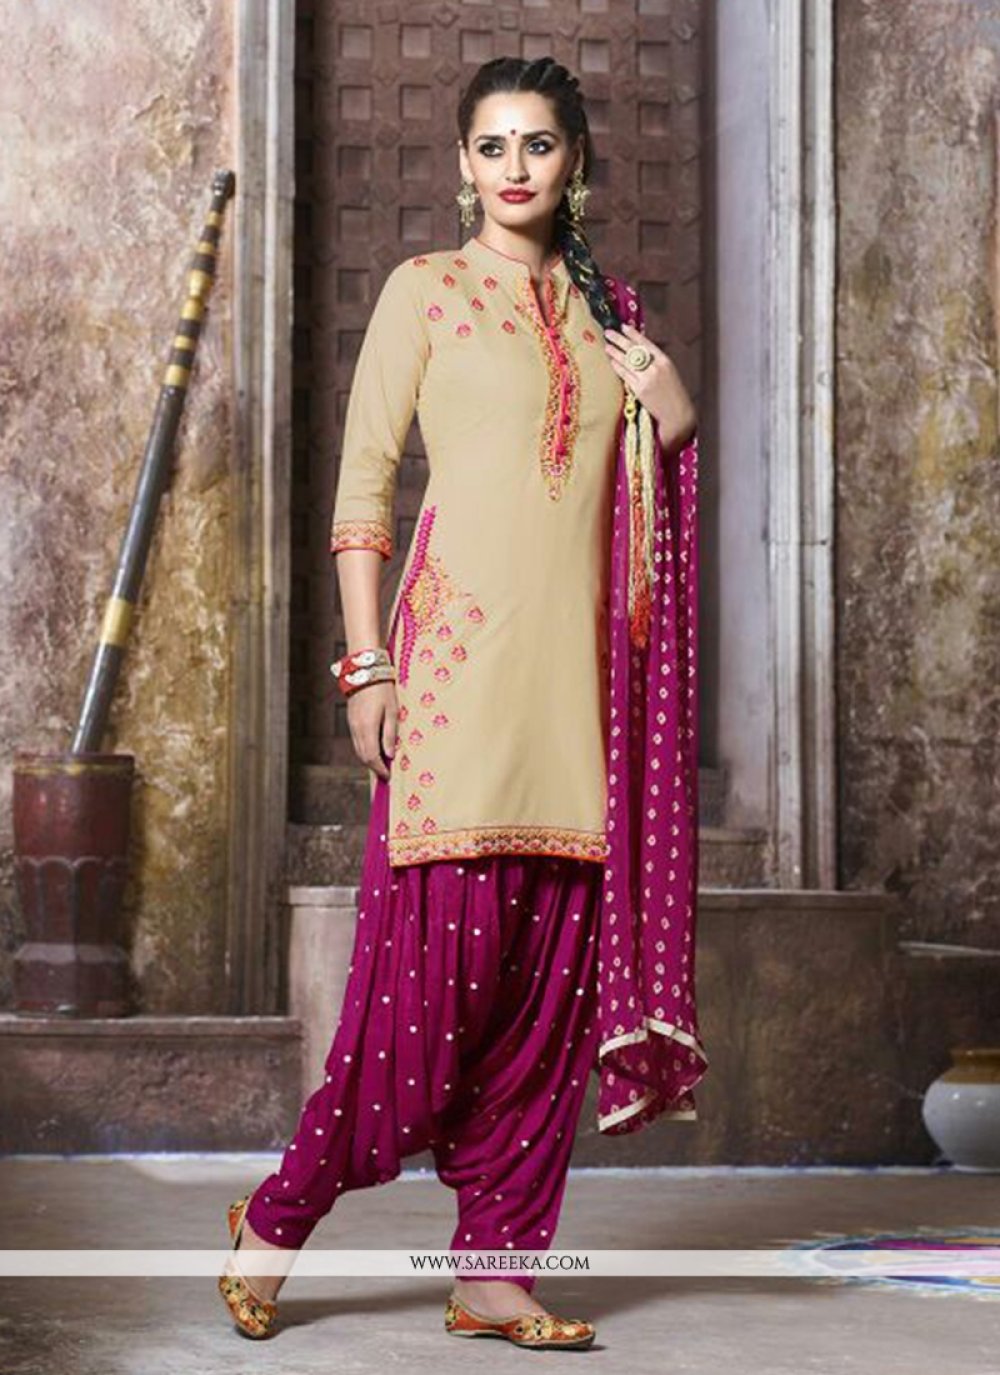 Punjabi Actress Mandy Takhar Pretty Suit Looks